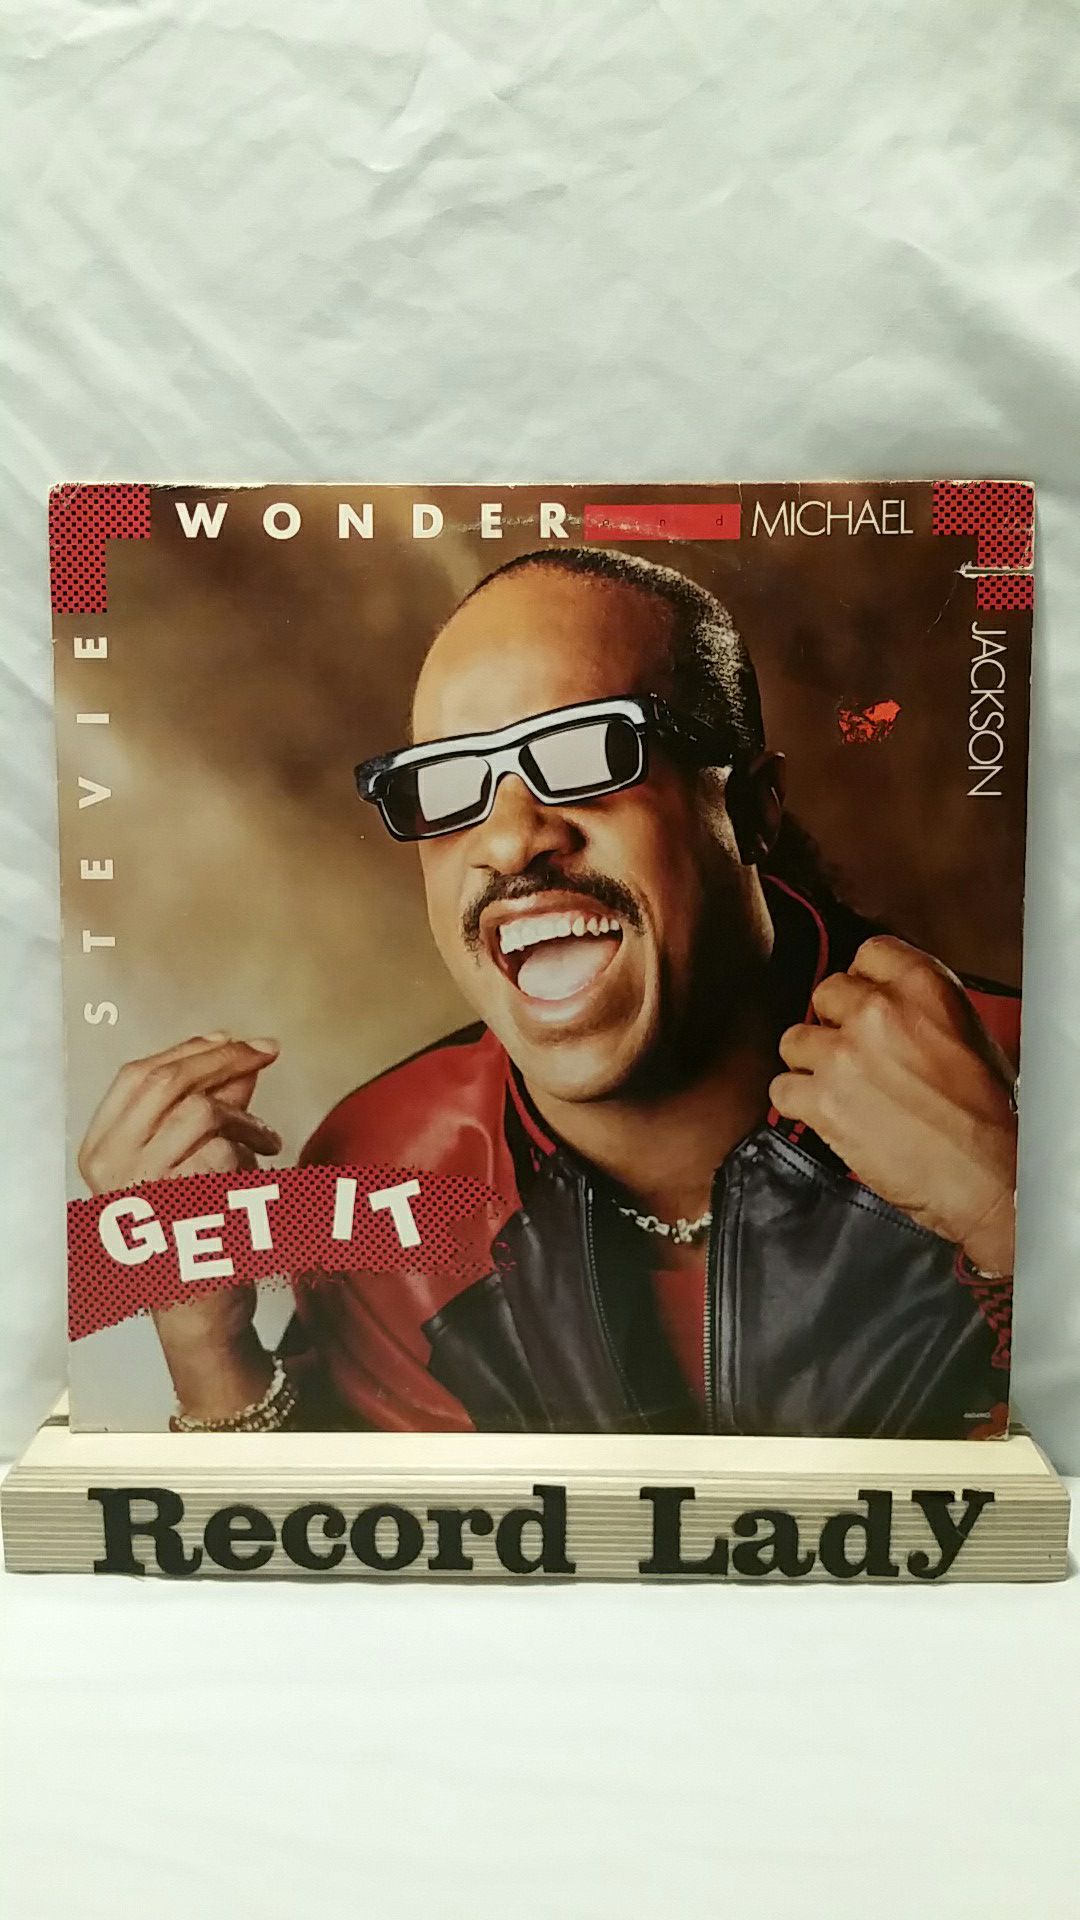 Stevie Wonder And Michael Jackson "Get It" vinyl record Funk / soul